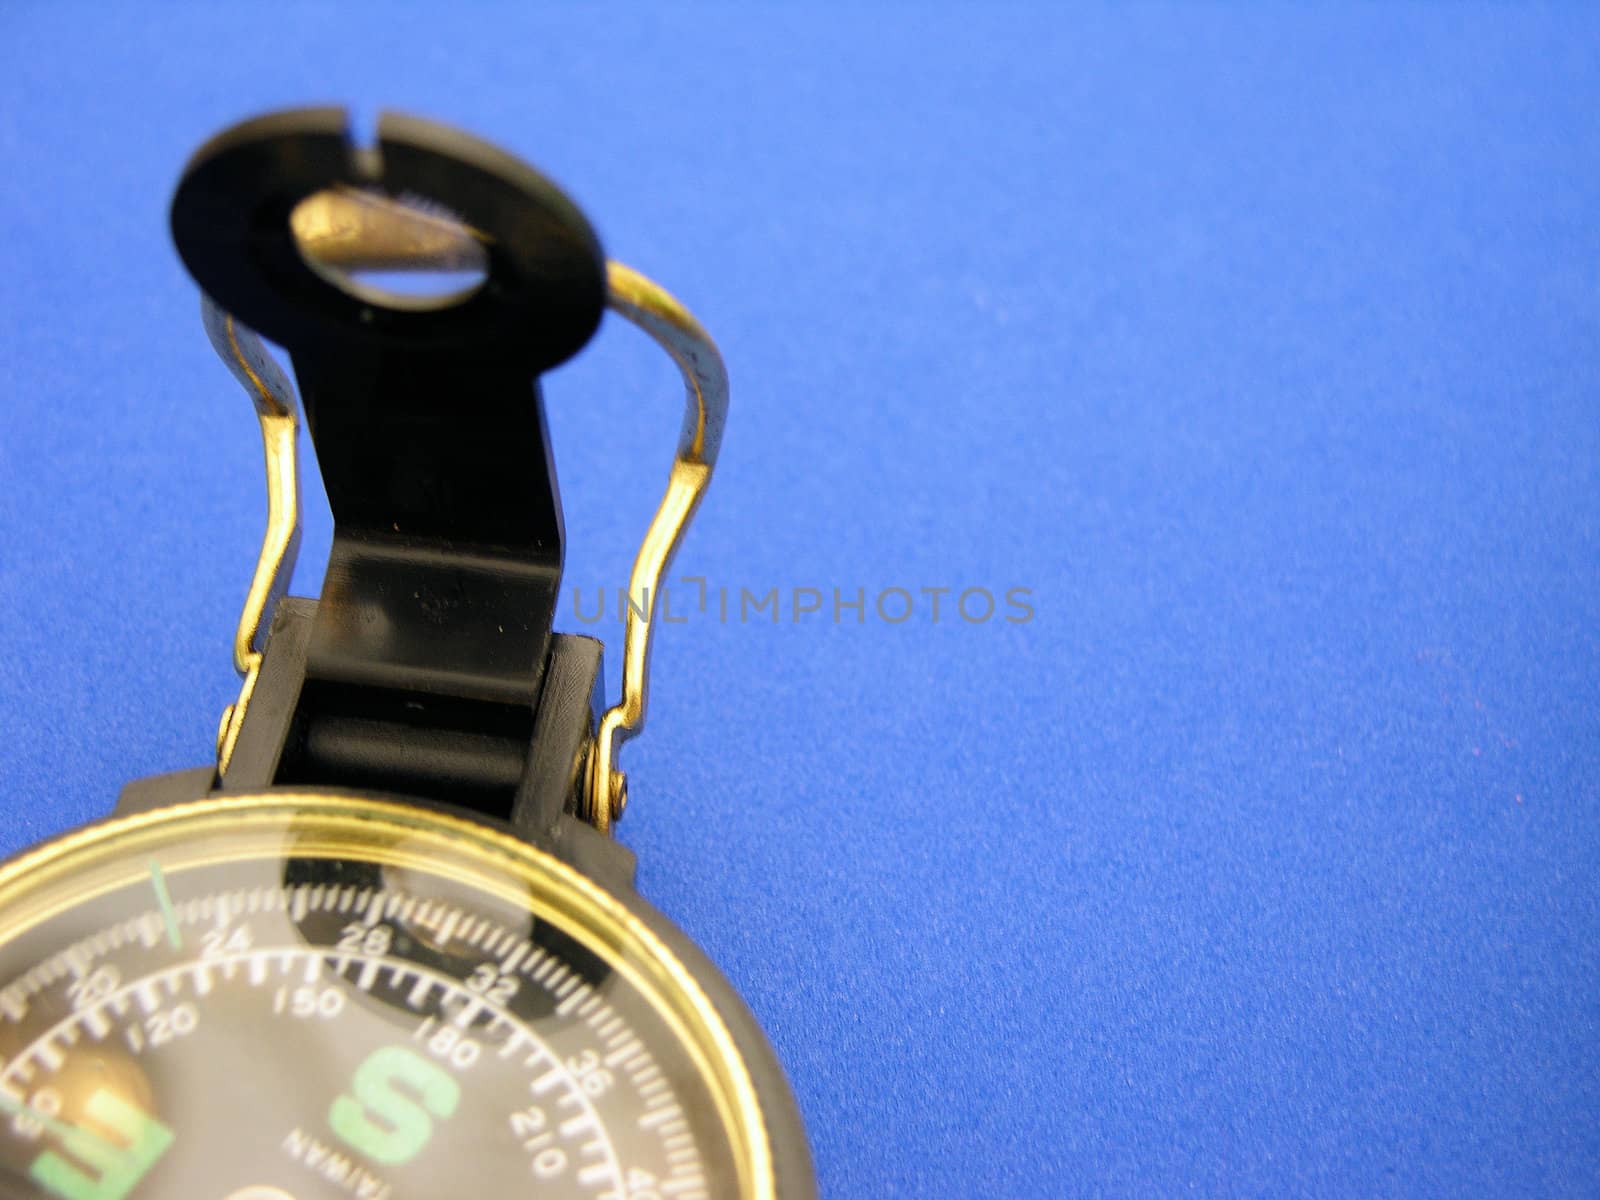 closeup view of a compass